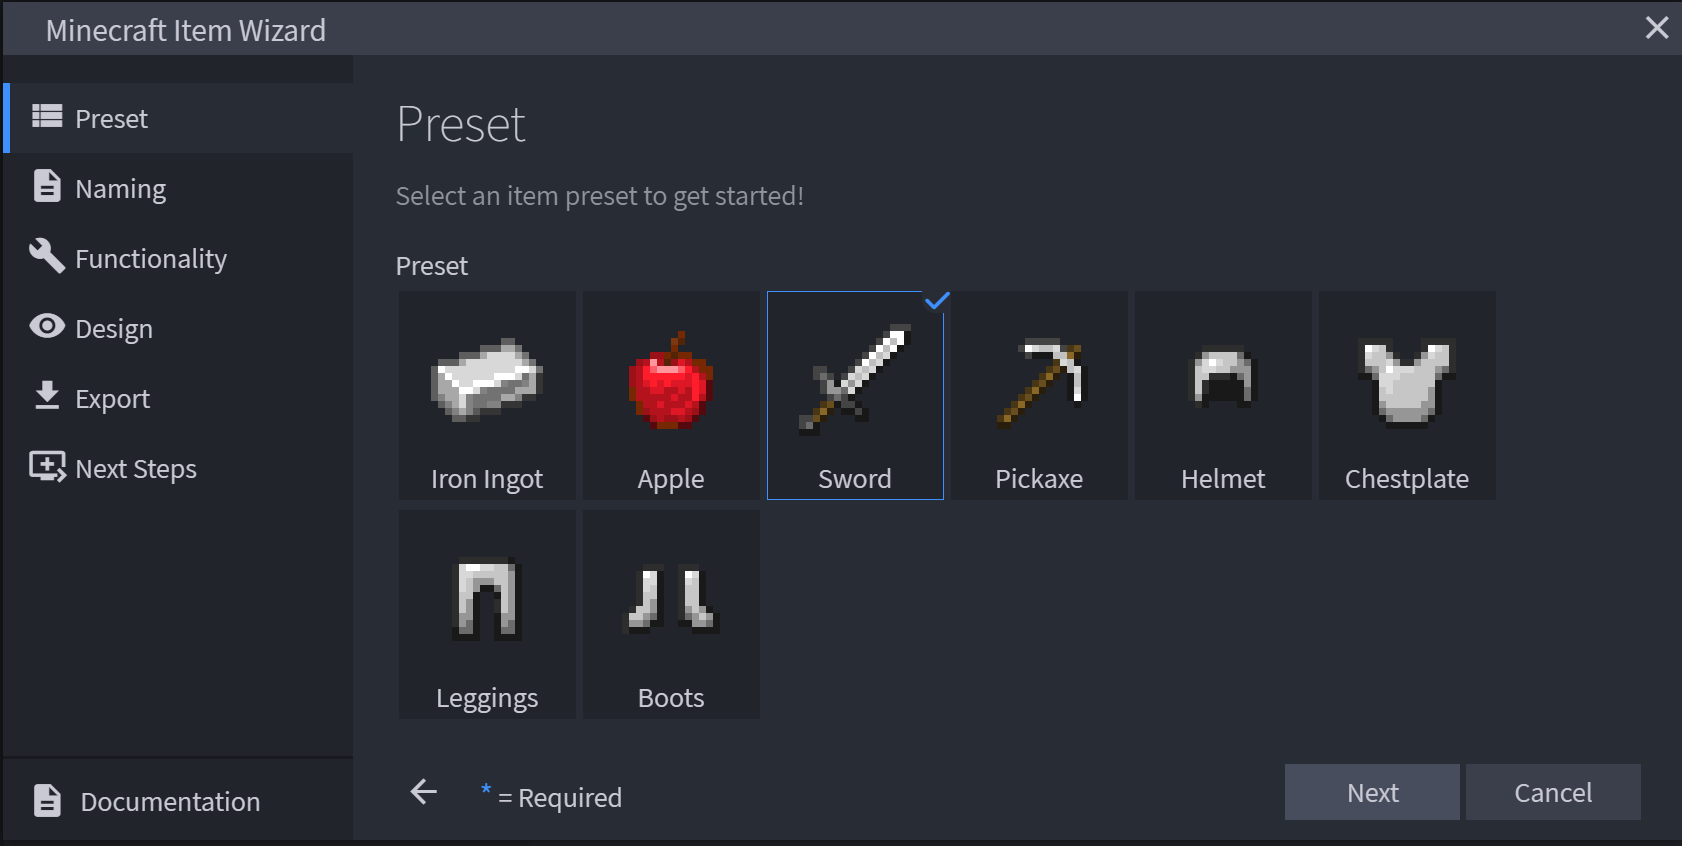 Blockbench screen showing the current preset item options: Iron Ingot, Apple, Sword, Pickaxe, Helmet, Chestplate, Leggins, and Boots.